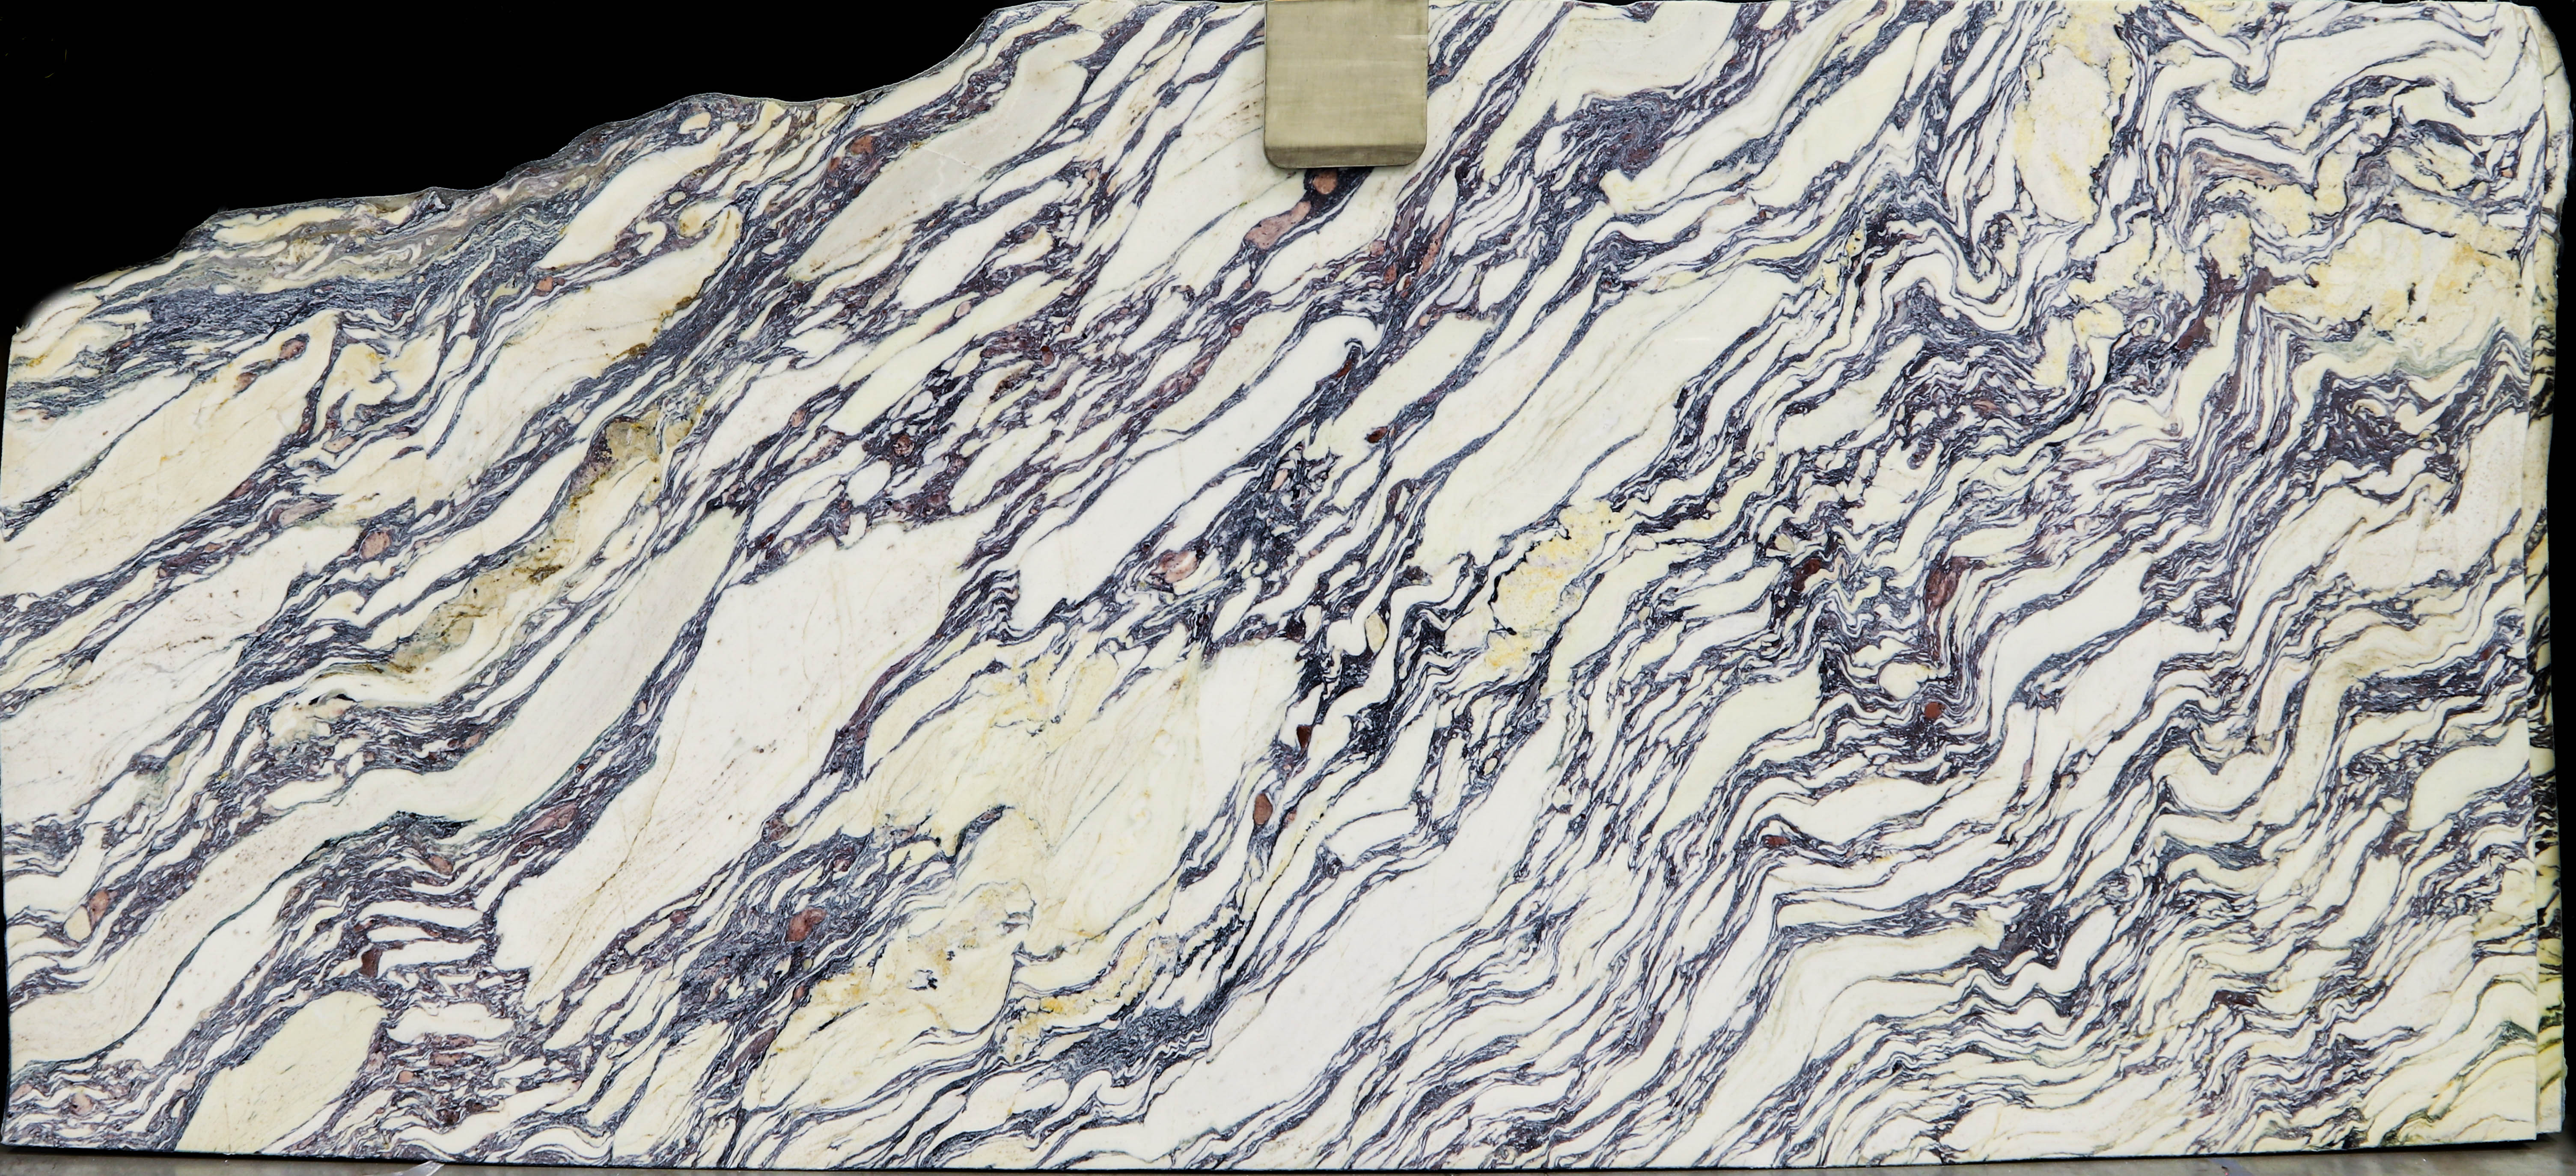  Fantastico Arni Marble Slab 3/4  Polished Stone - 86319#2 -  41X132 